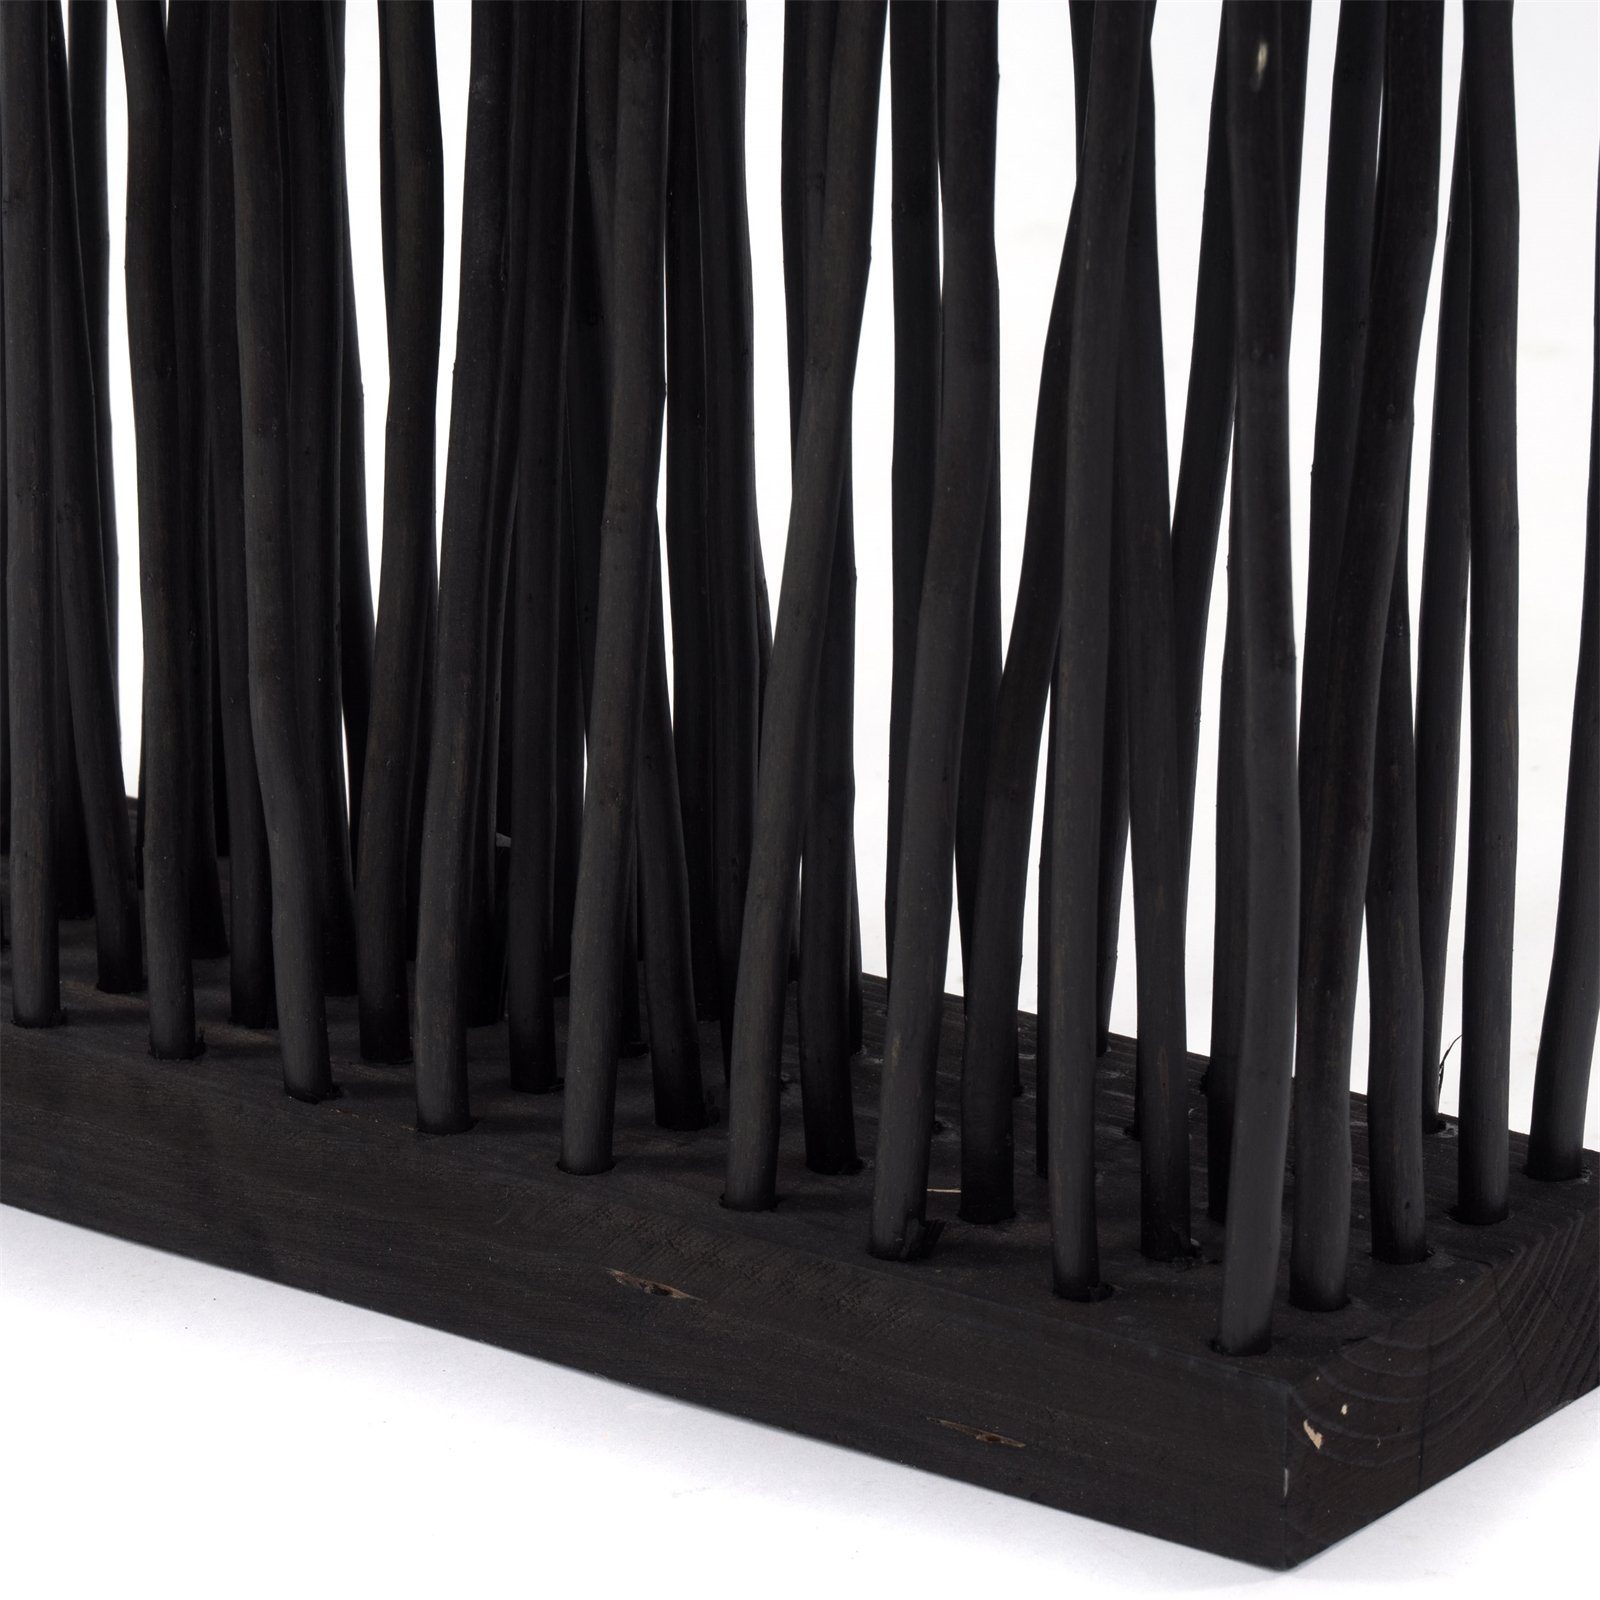 DESIGN DELIGHTS Paravent RAUMTEILER Weidenholz, "WAVE", Paravent, schwarz 170x40cm (HxB), Trennwand